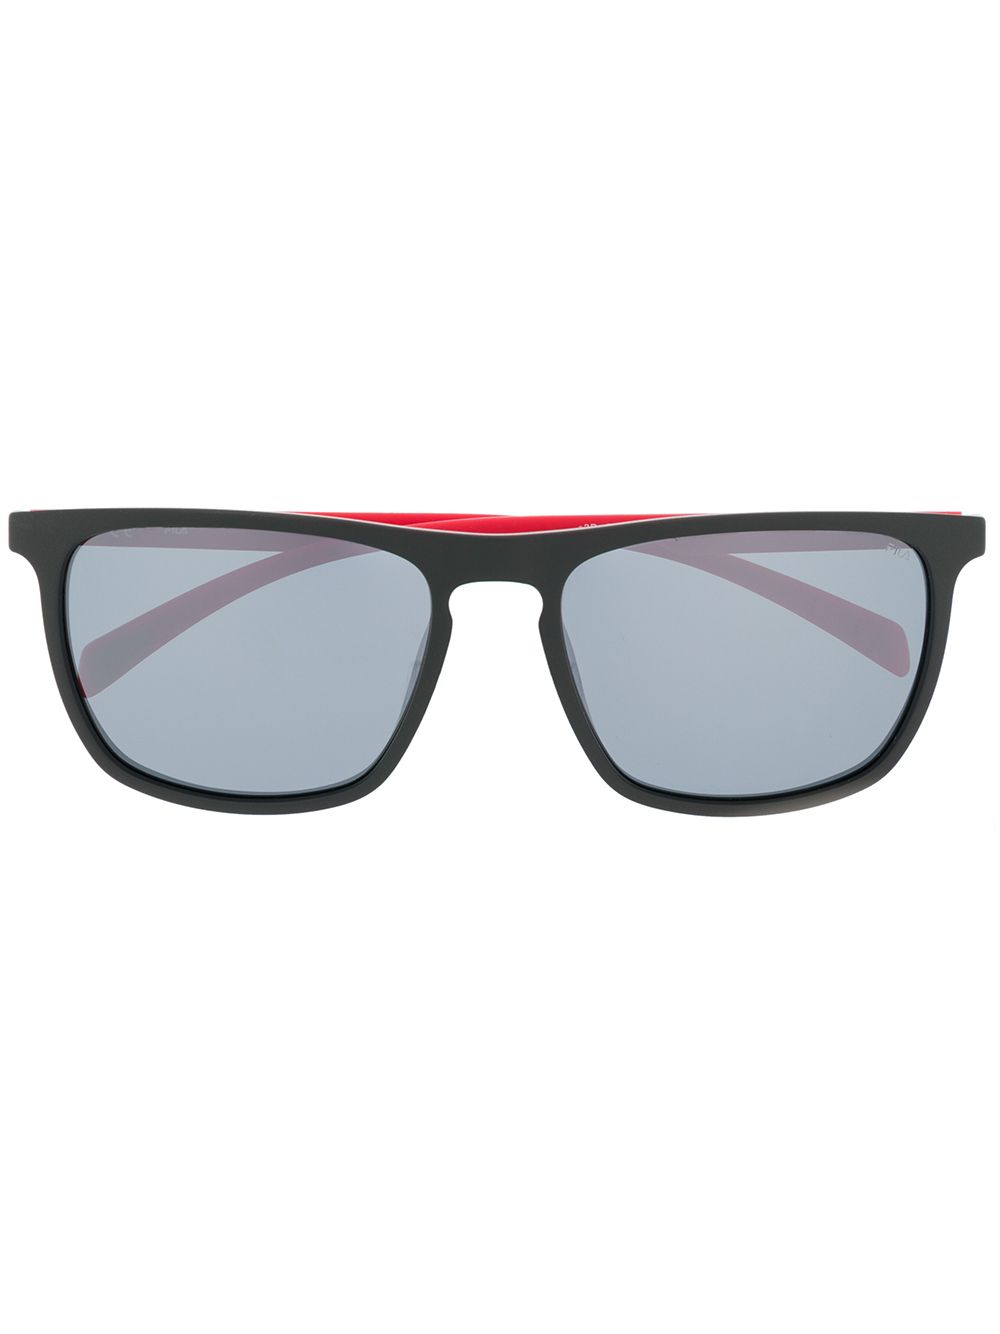 фото Fila солнцезащитные очки SF9331 в квадратной оправе